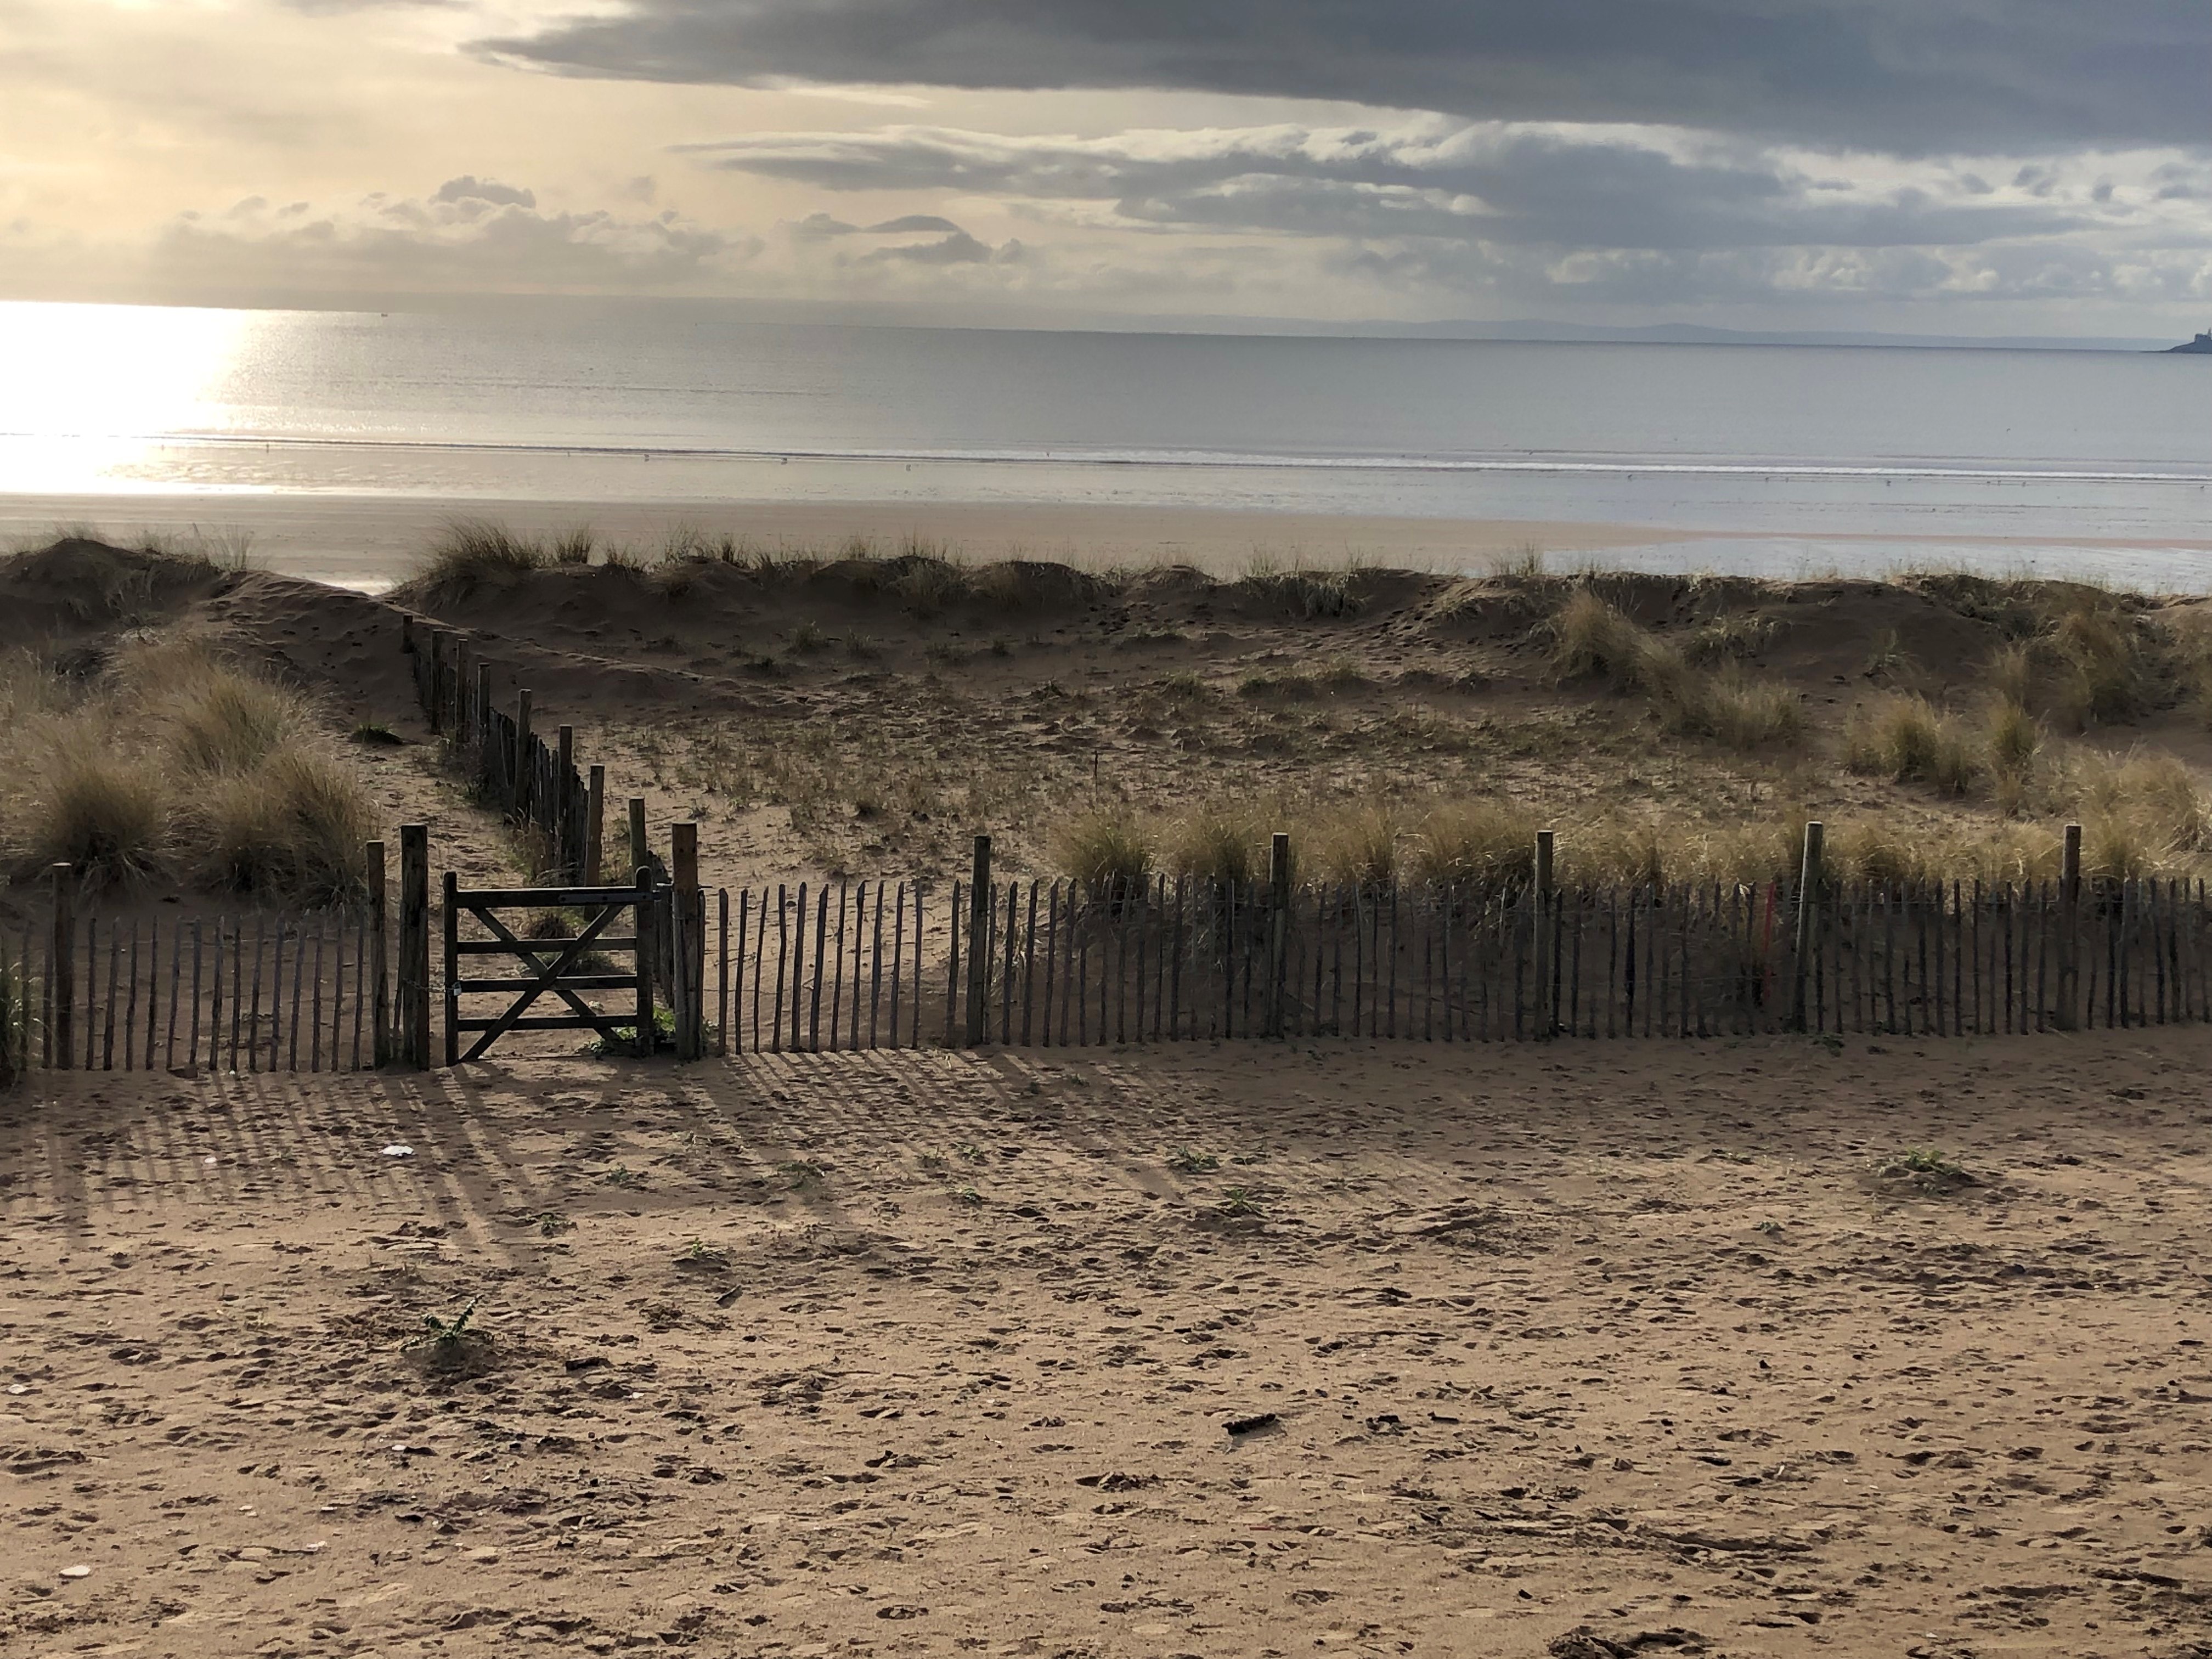 Beach scene near Swansea